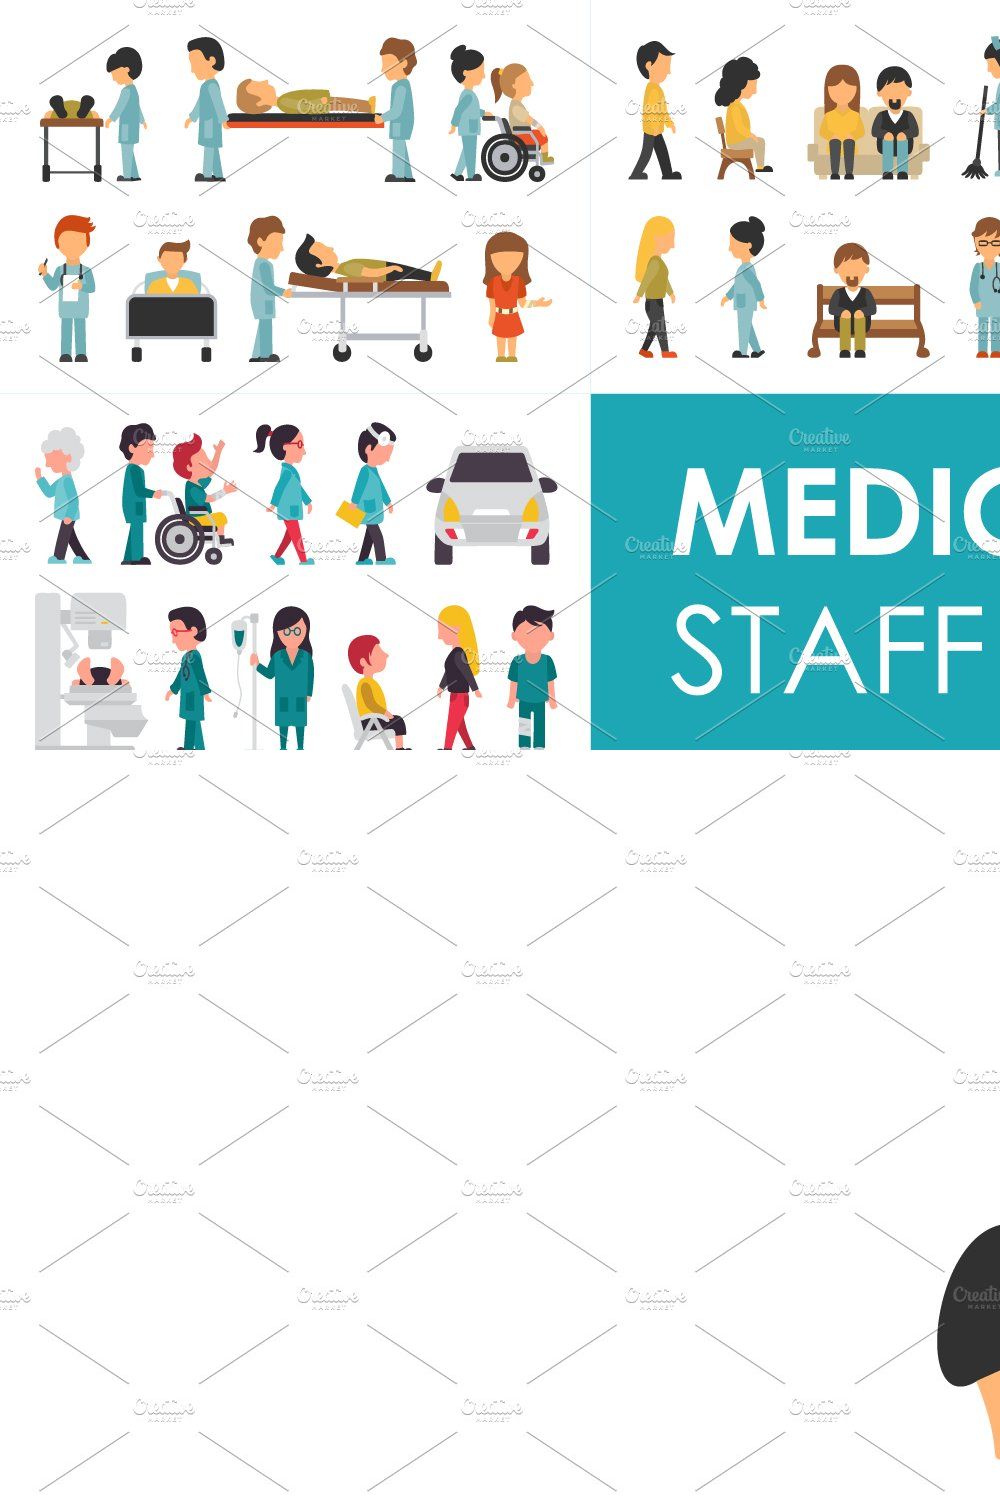 Medical Staff - flat people set pinterest preview image.